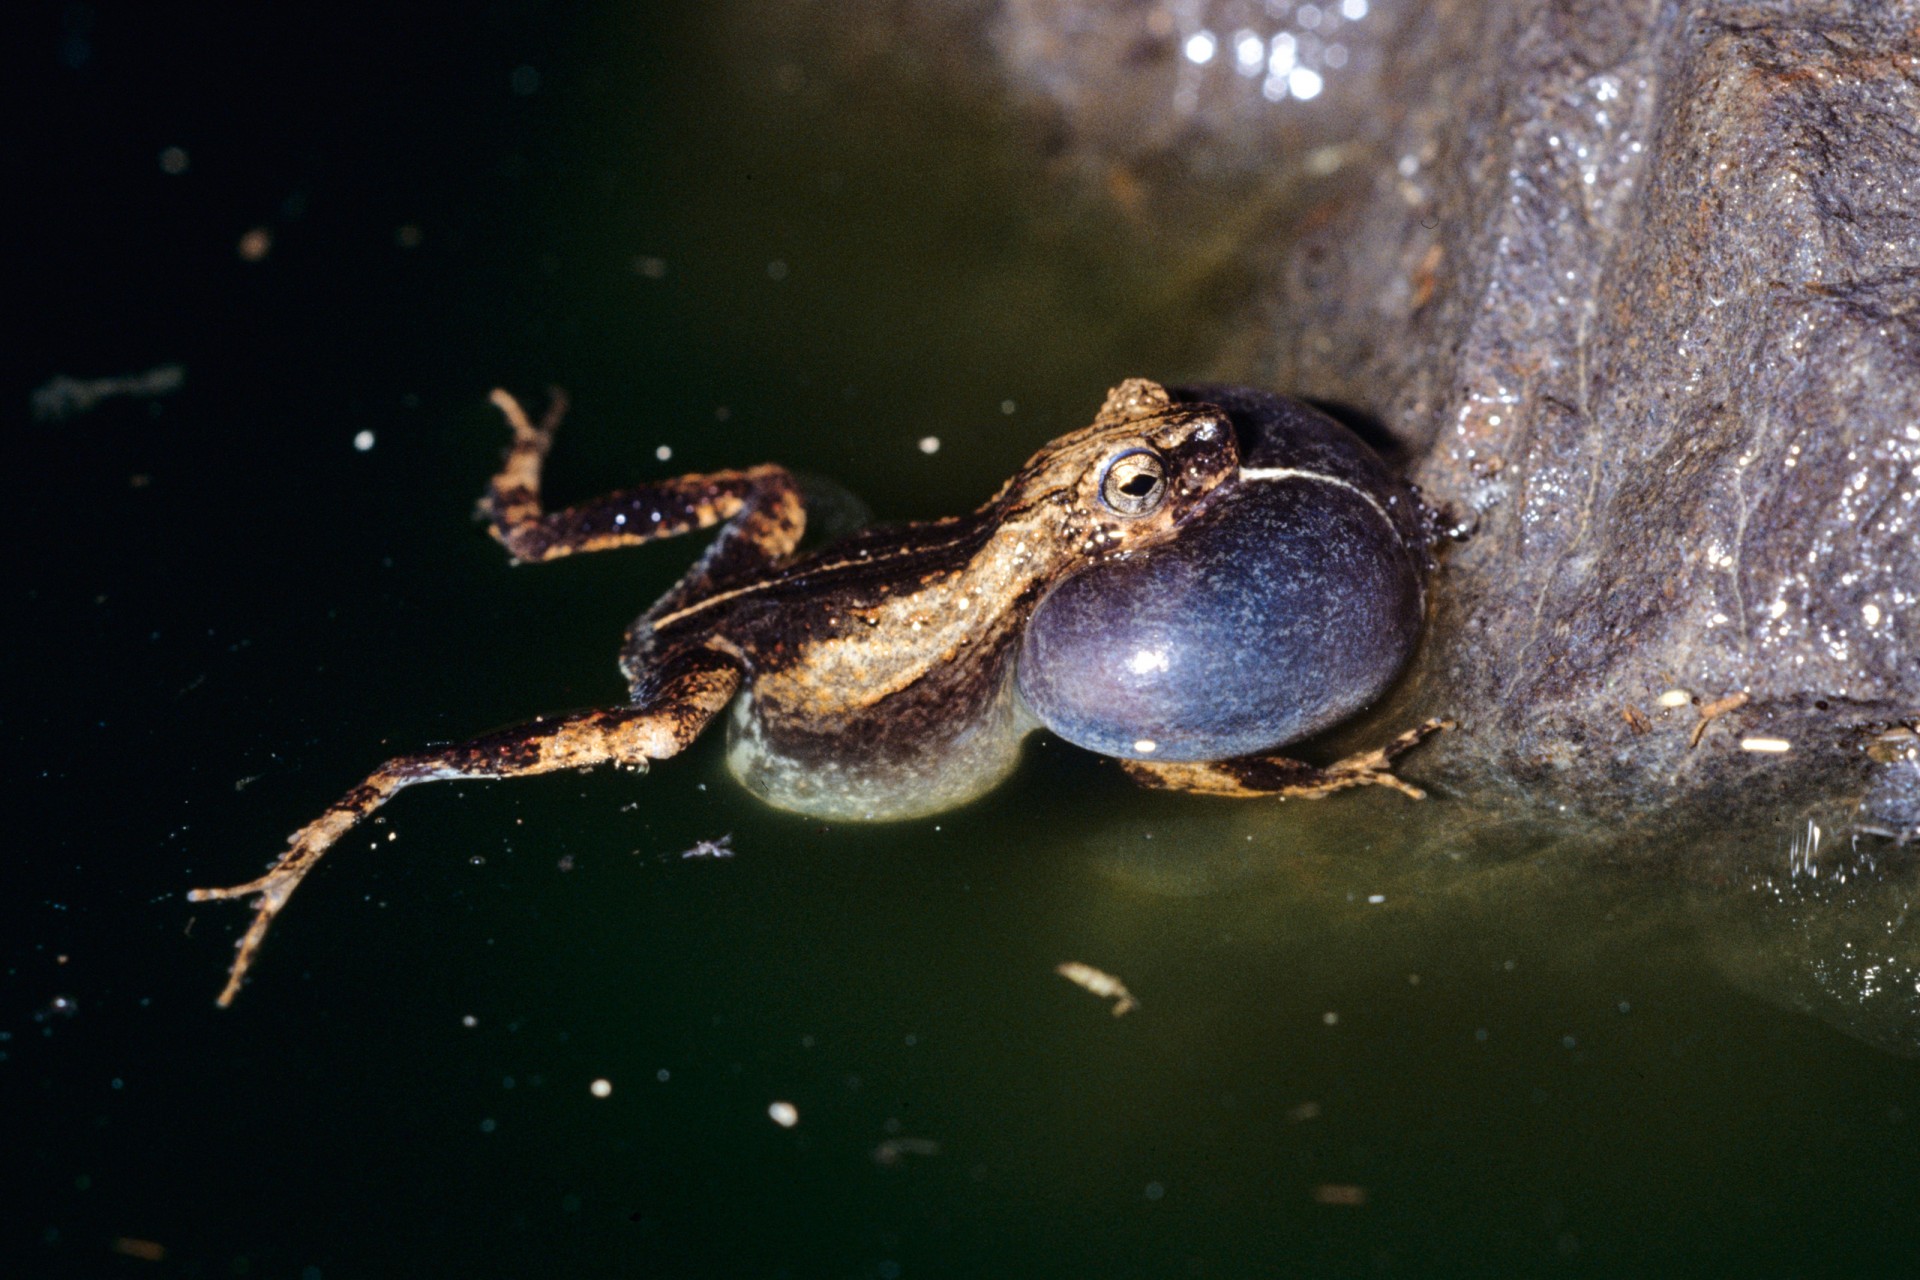 Frog leap sex position